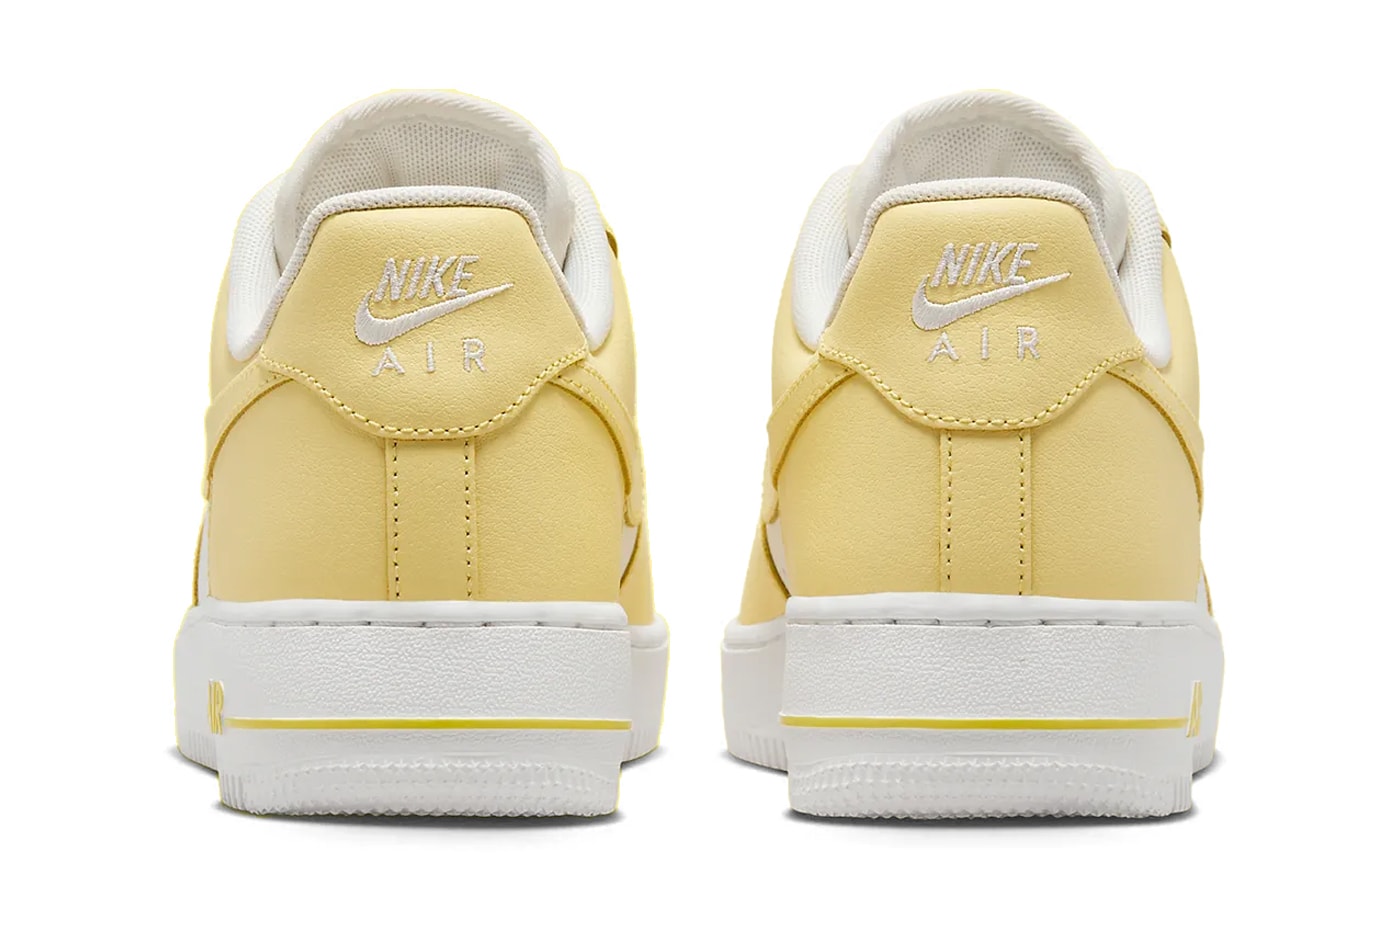 Nike Air Force 1 推出全新「Lemon」配色